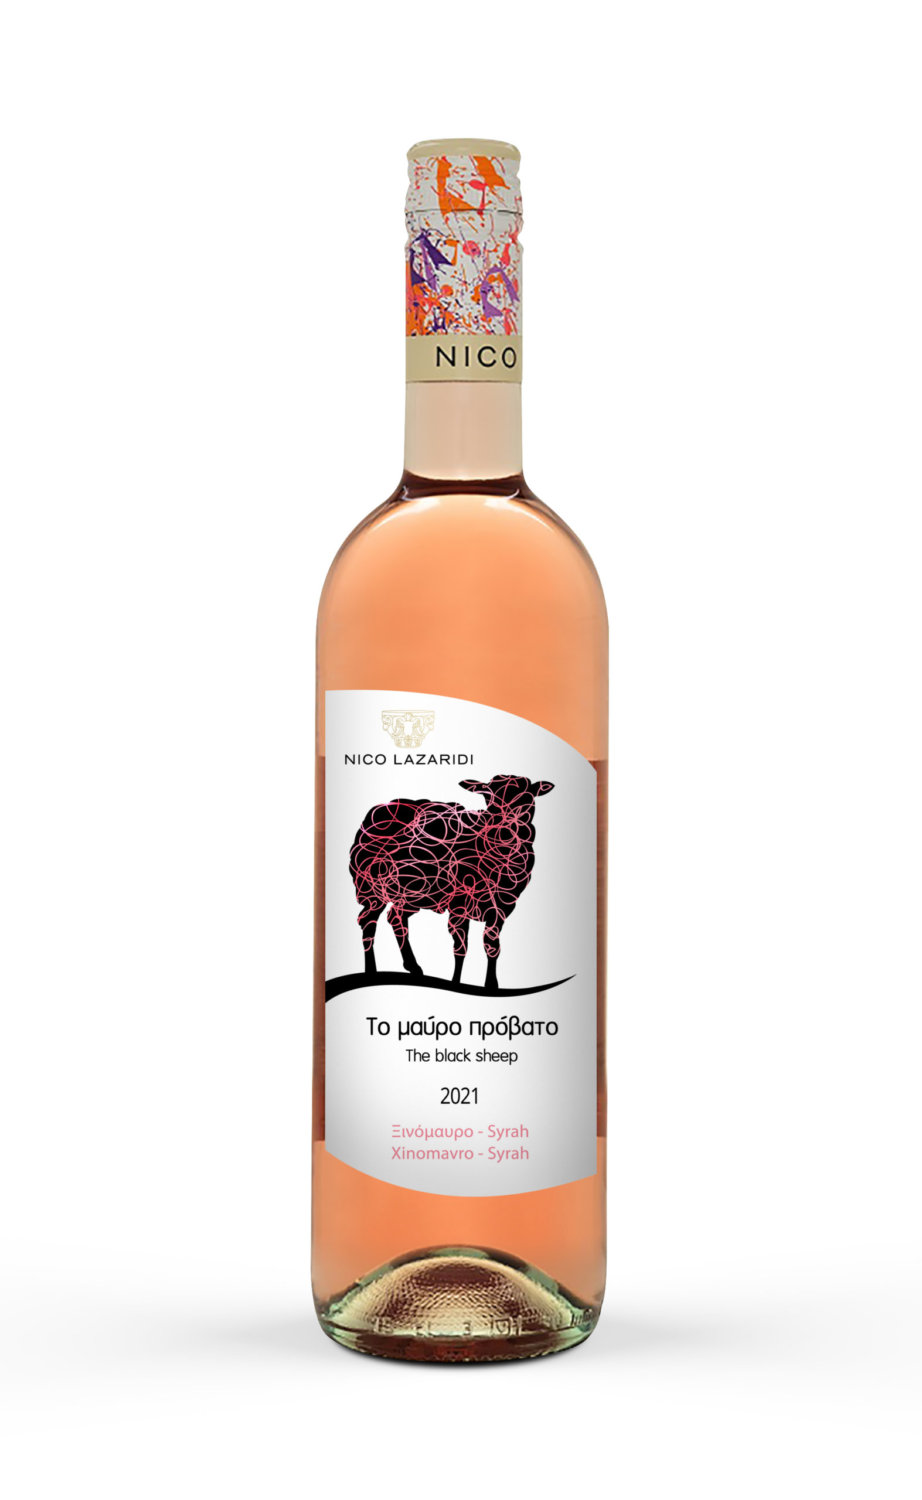 a bottle of The Black Sheep Xinomavro - Syrah 2021 rose wine